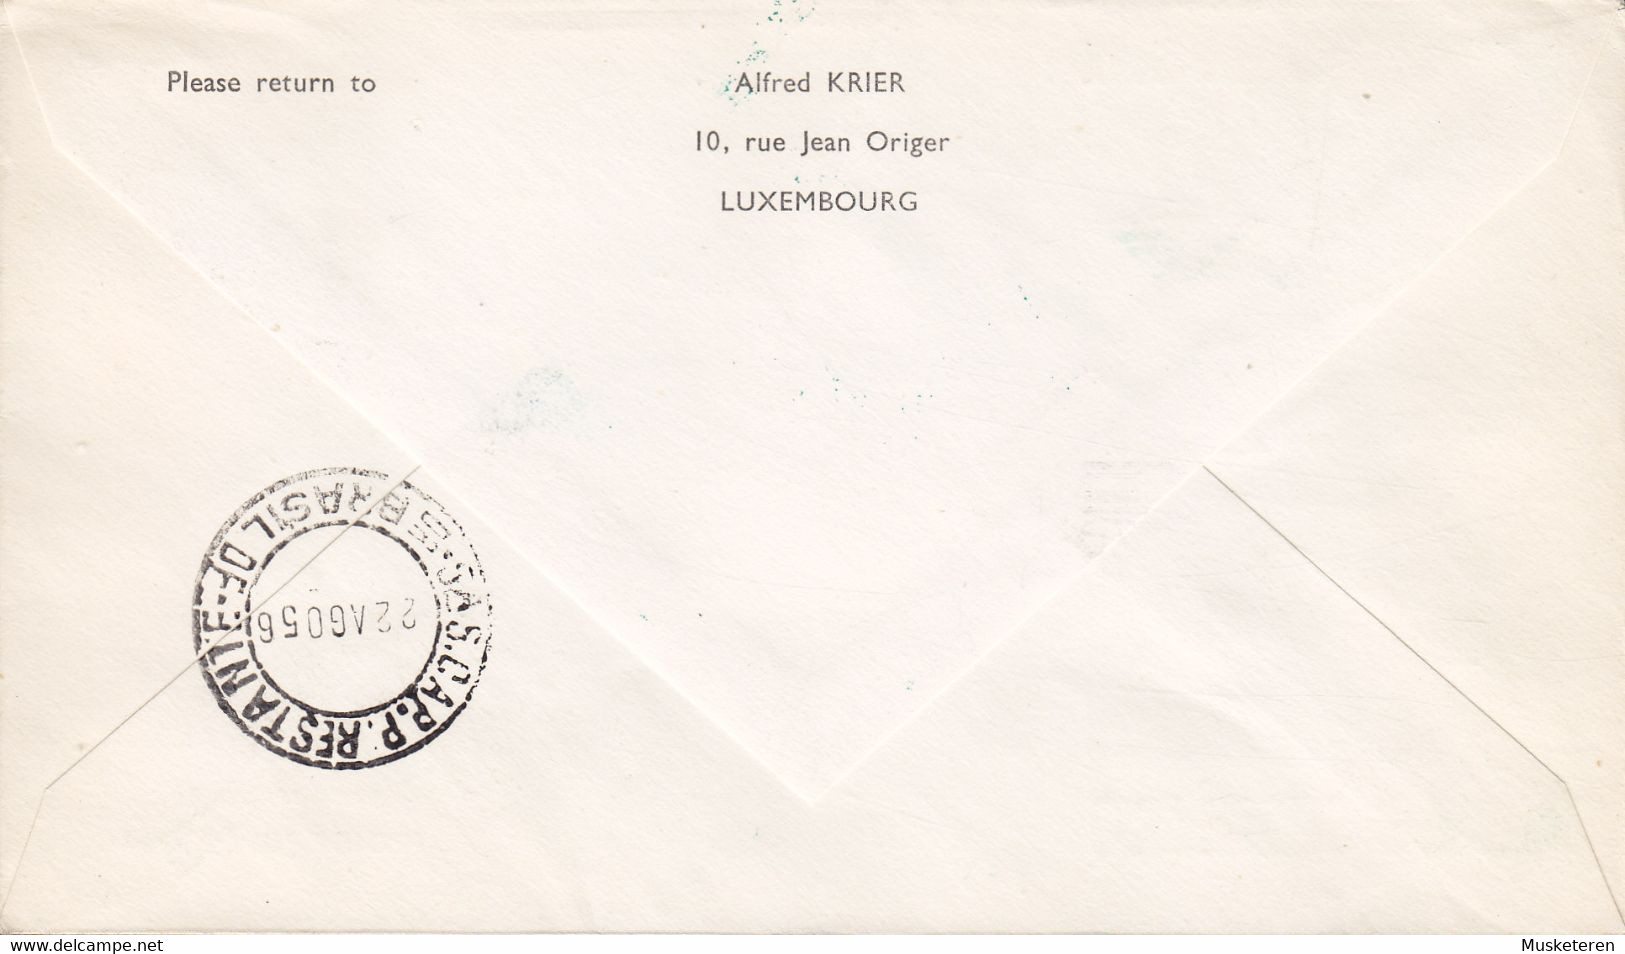 Luxembourg LUFTHANSA Wiederaufnahme Flugverkehrs Mit Südamerika LUXEMBOURG - RIO DE JANEIRO 1956 Cover Lettre Brief - Lettres & Documents